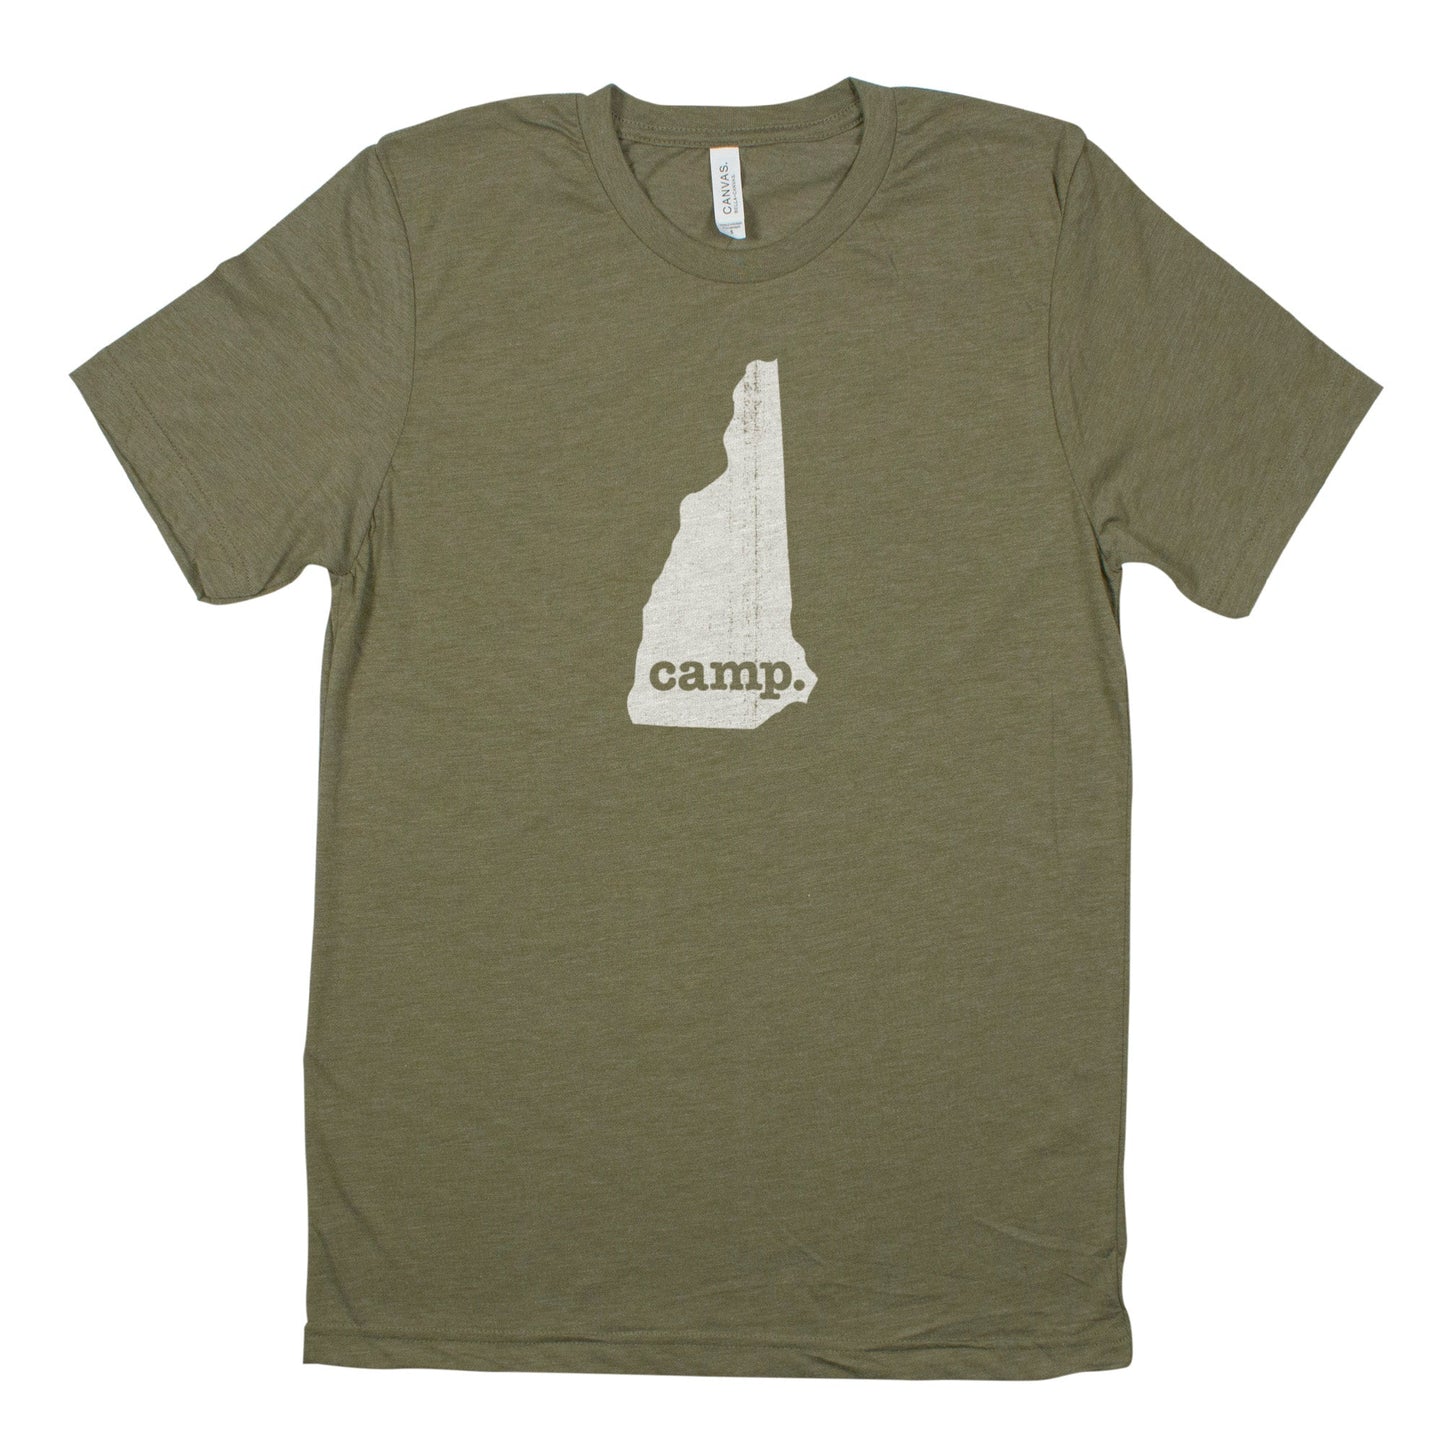 camp. Men's Unisex T-Shirt - New Hampshire